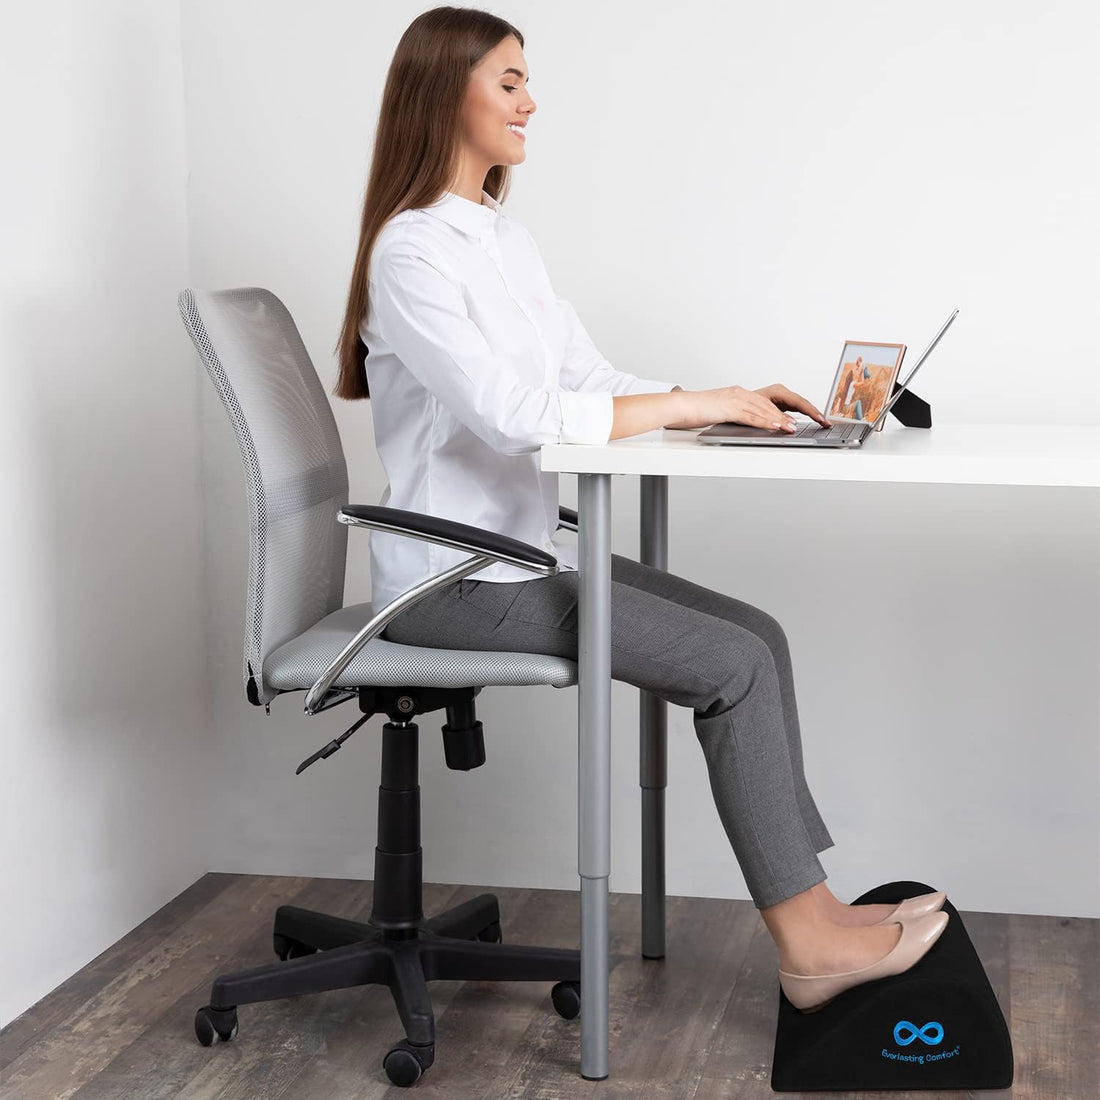  The Original Everlasting Comfort Foot Rest Under Desk